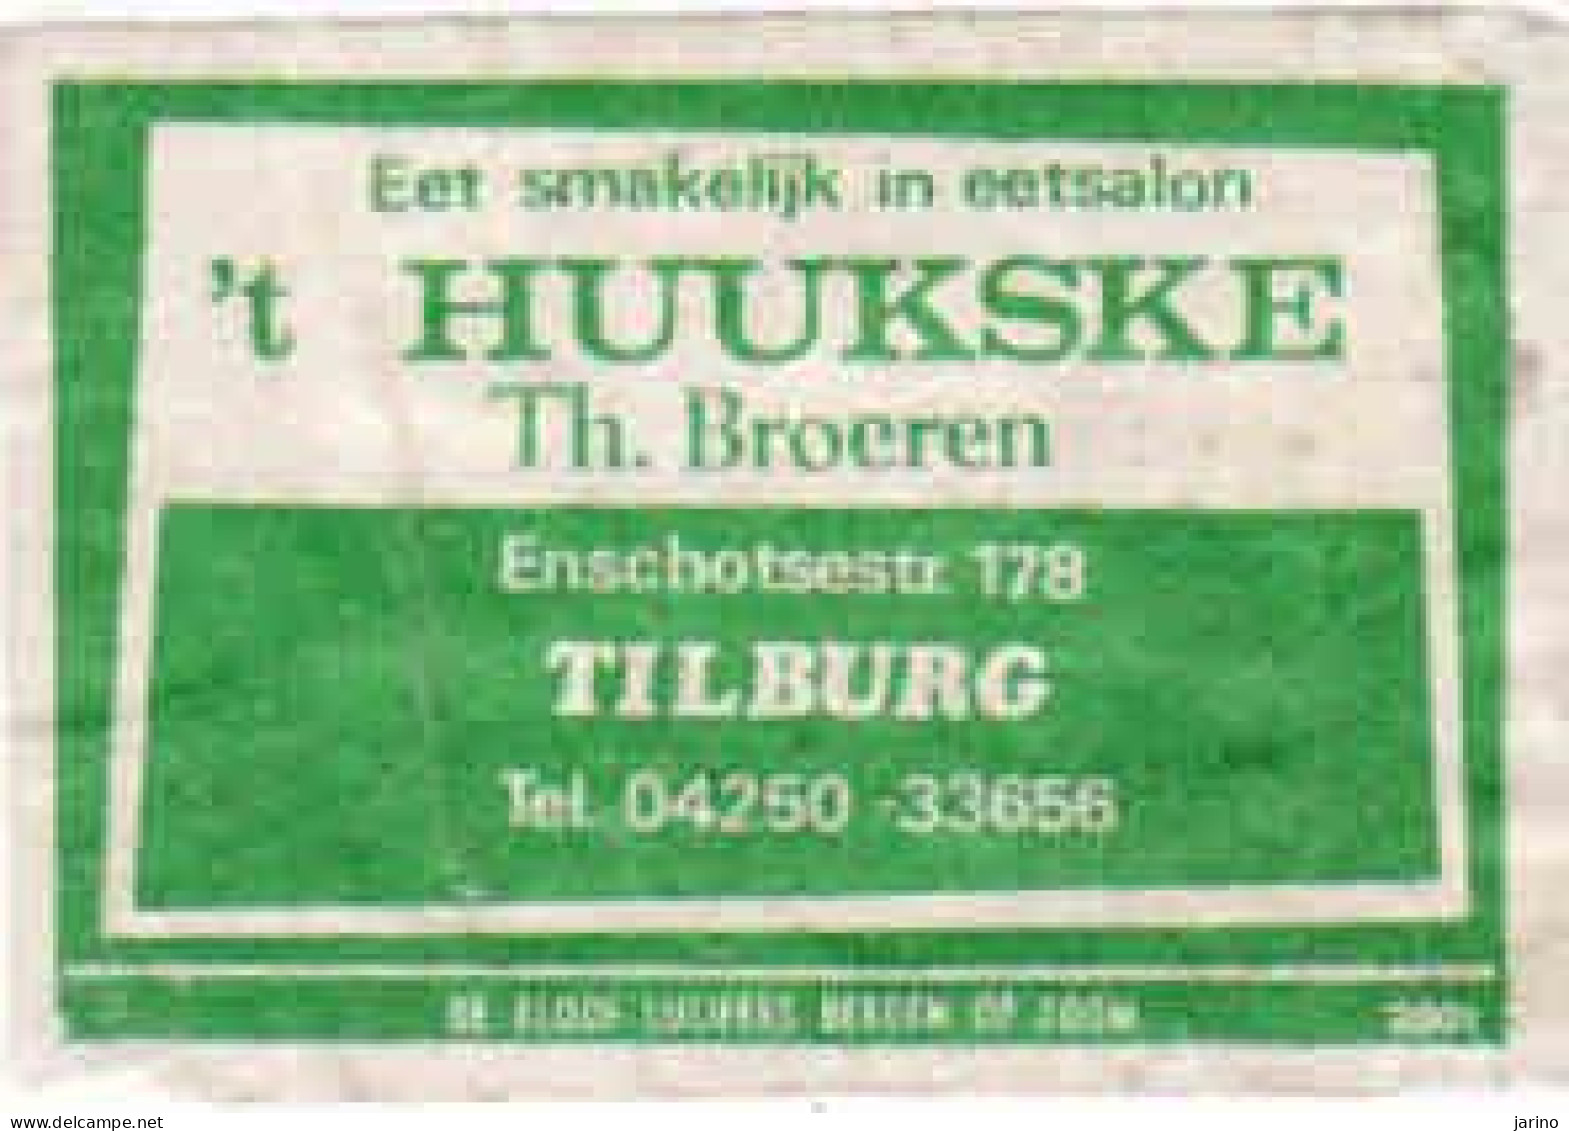 Dutch Matchbox Label, TILBURG - North Brabant, Eetsalon 't HUUKSKE, Th. Broeren, Holland, Netherlands - Boites D'allumettes - Etiquettes